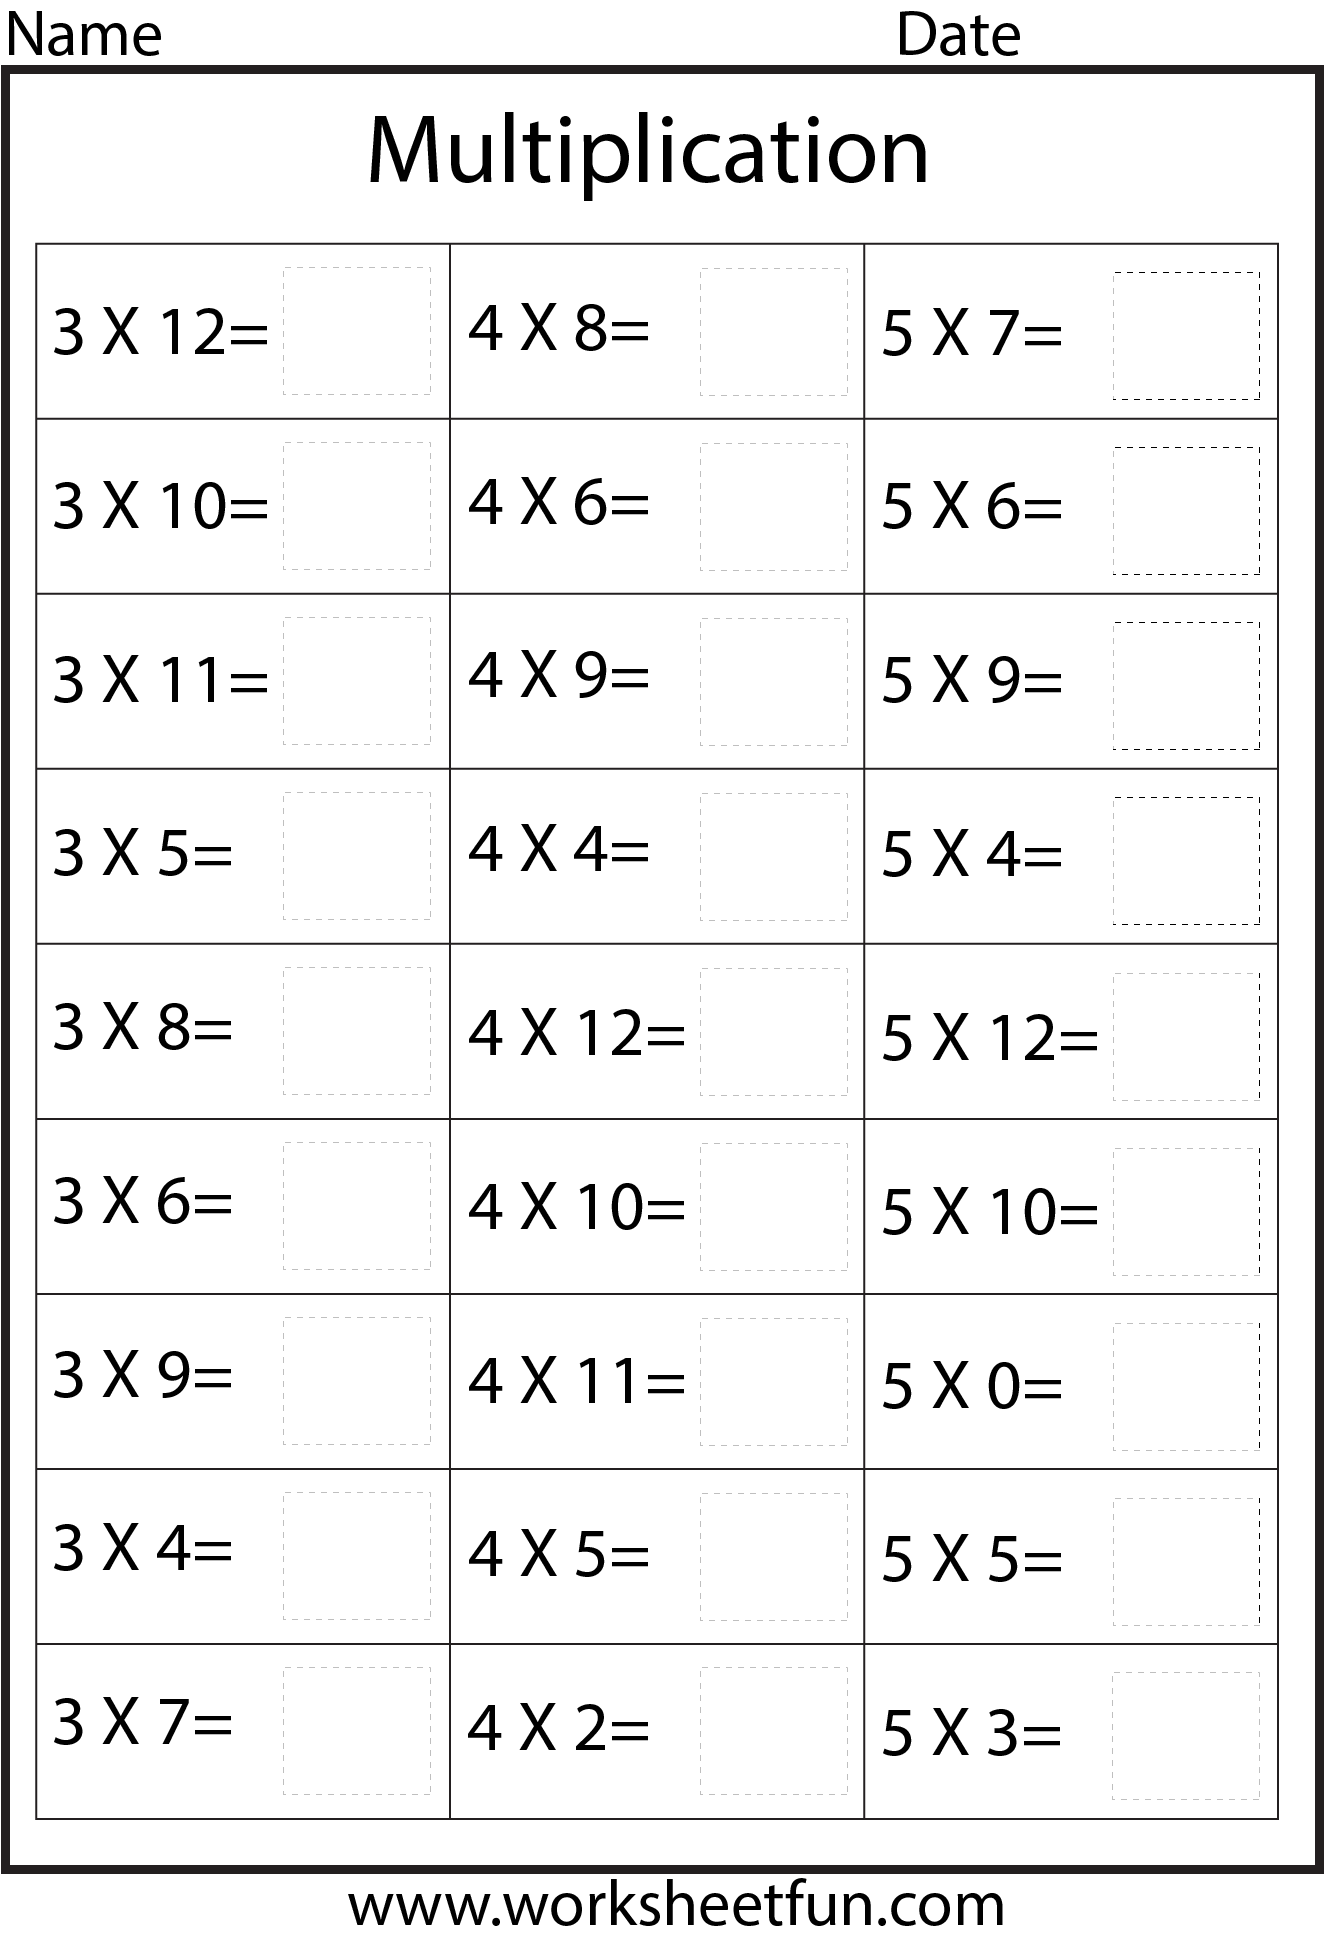 Worksheet Printable Multiplication Tables Maths